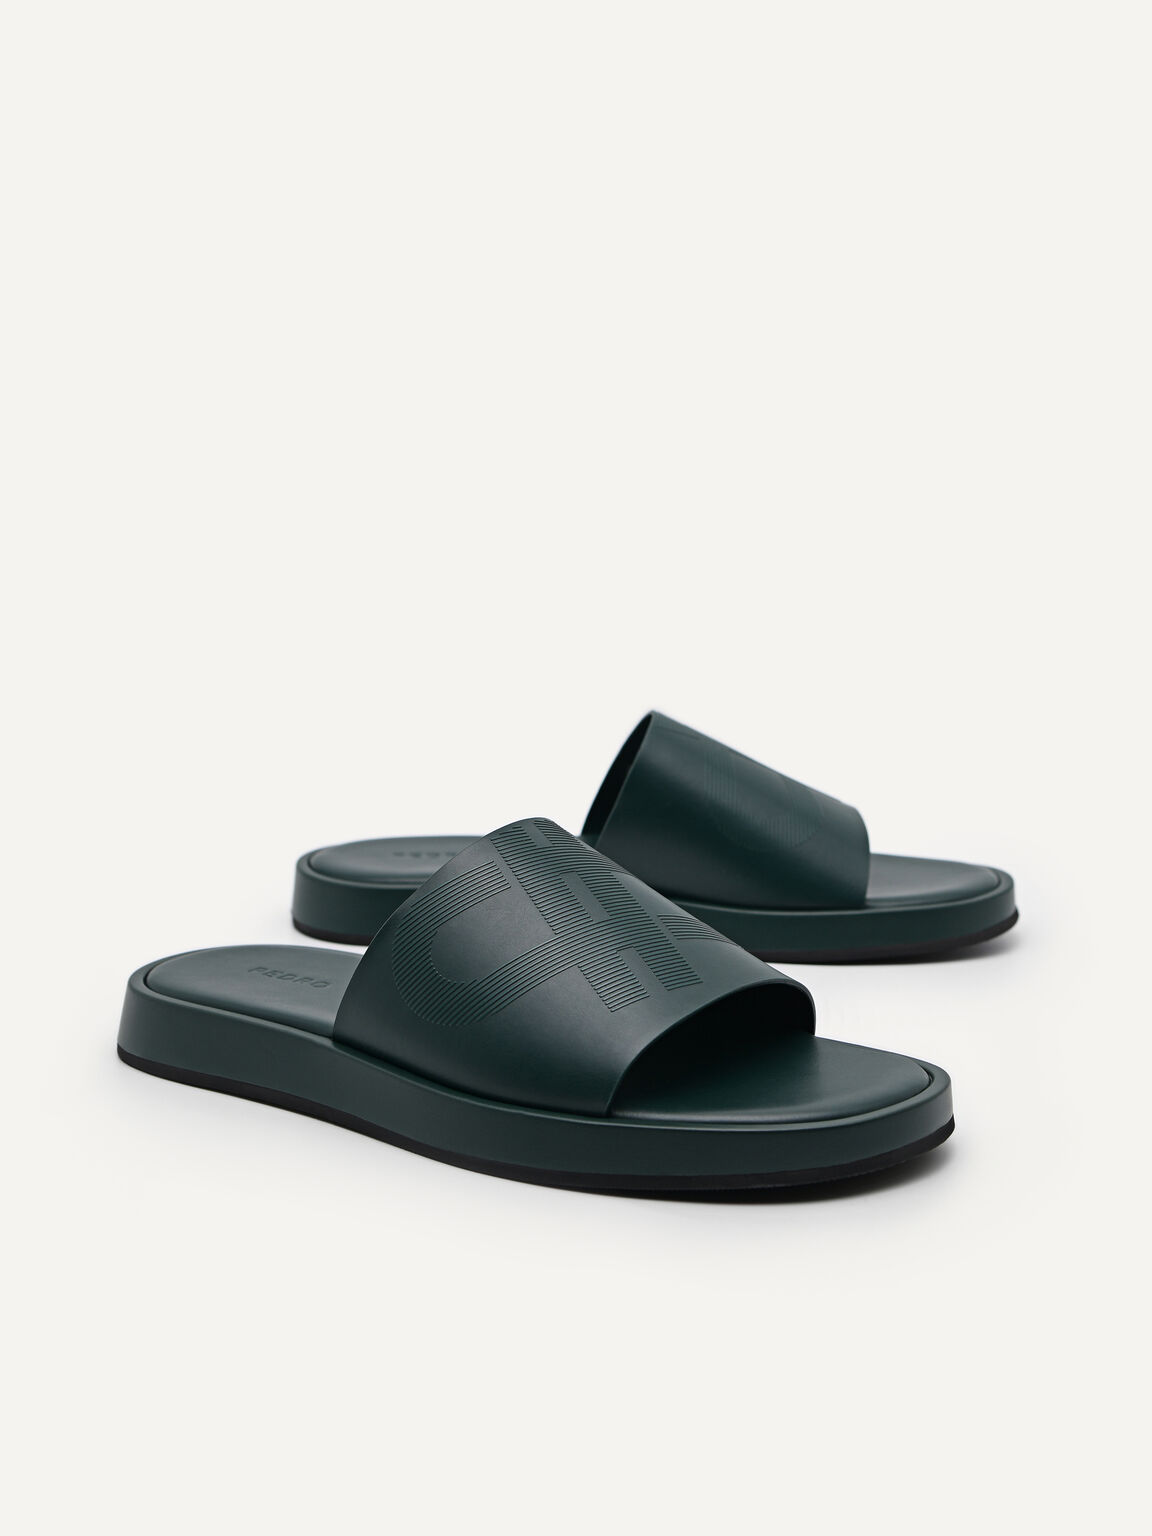 PEDRO Icon Slide Sandals, Dark Green